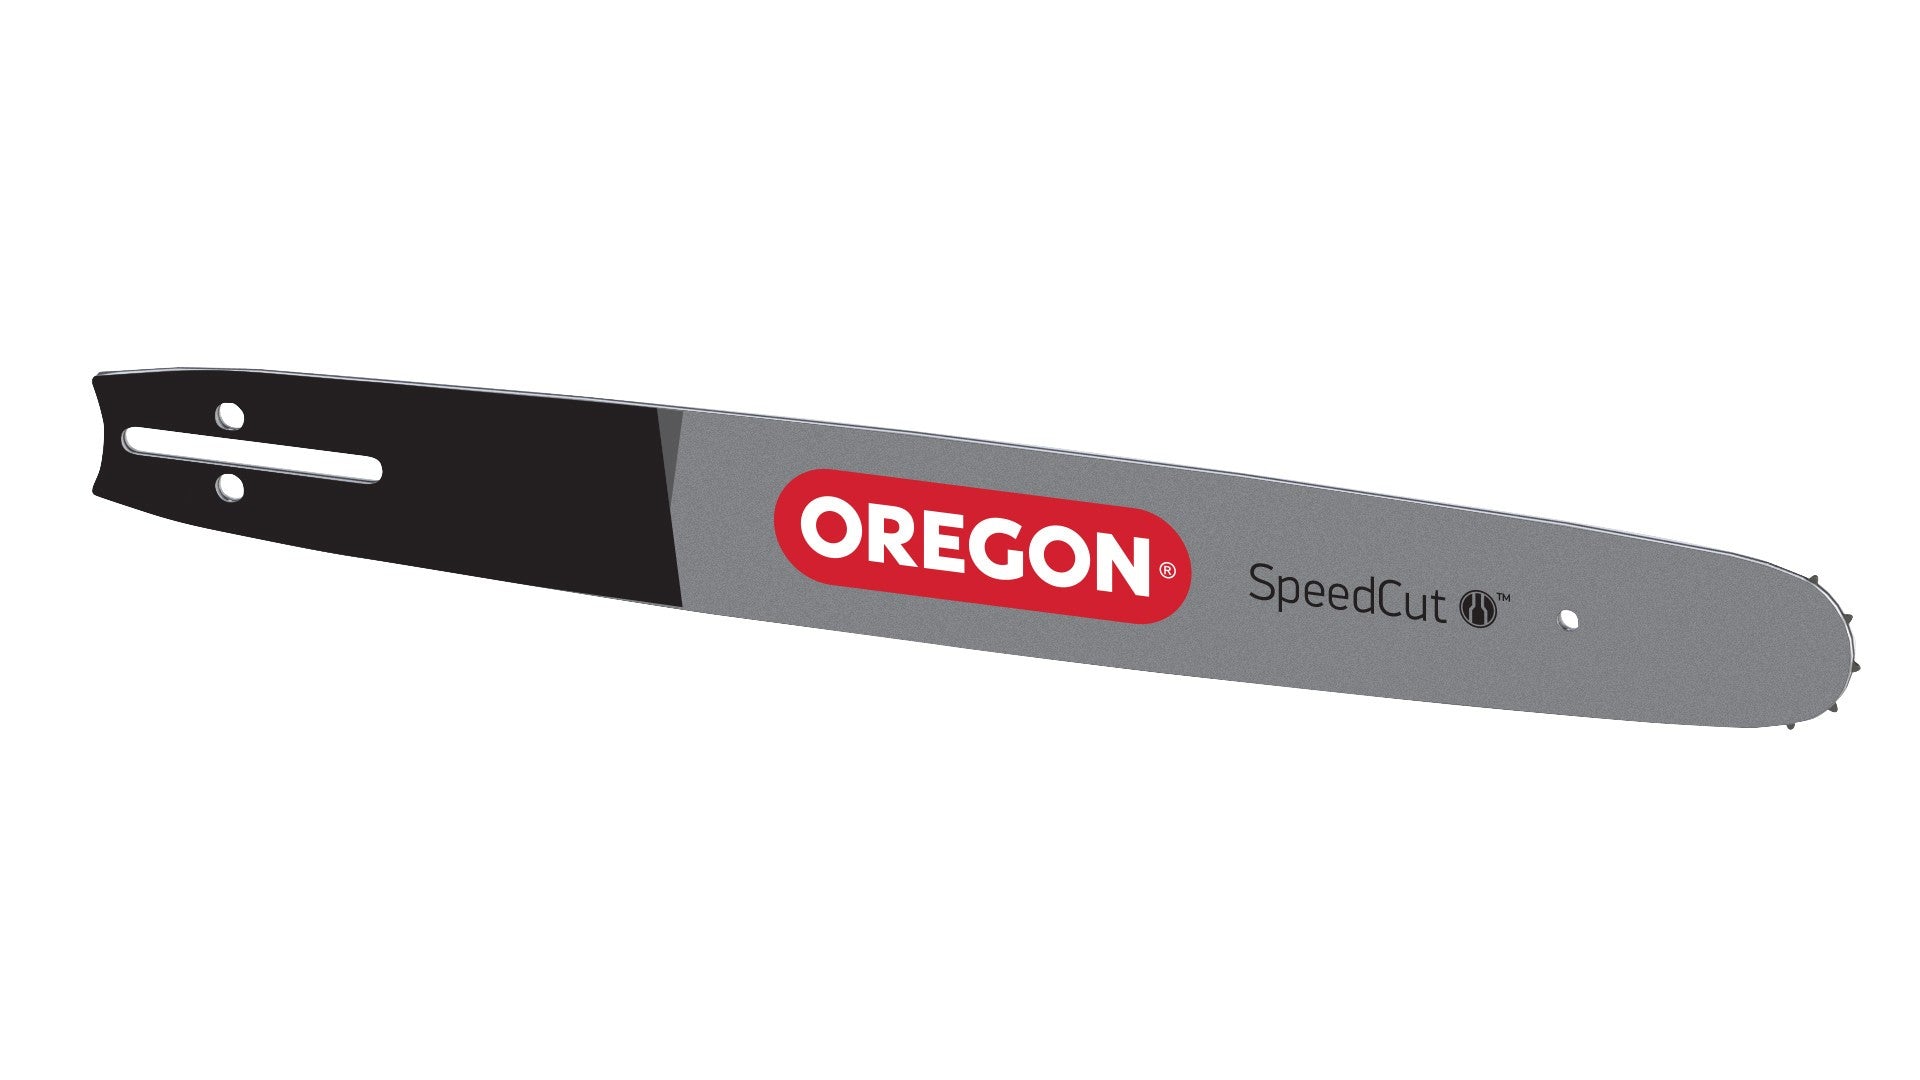 180TXLBA074 - Oregon 18" SpeedCut Chainsaw Guide Bar